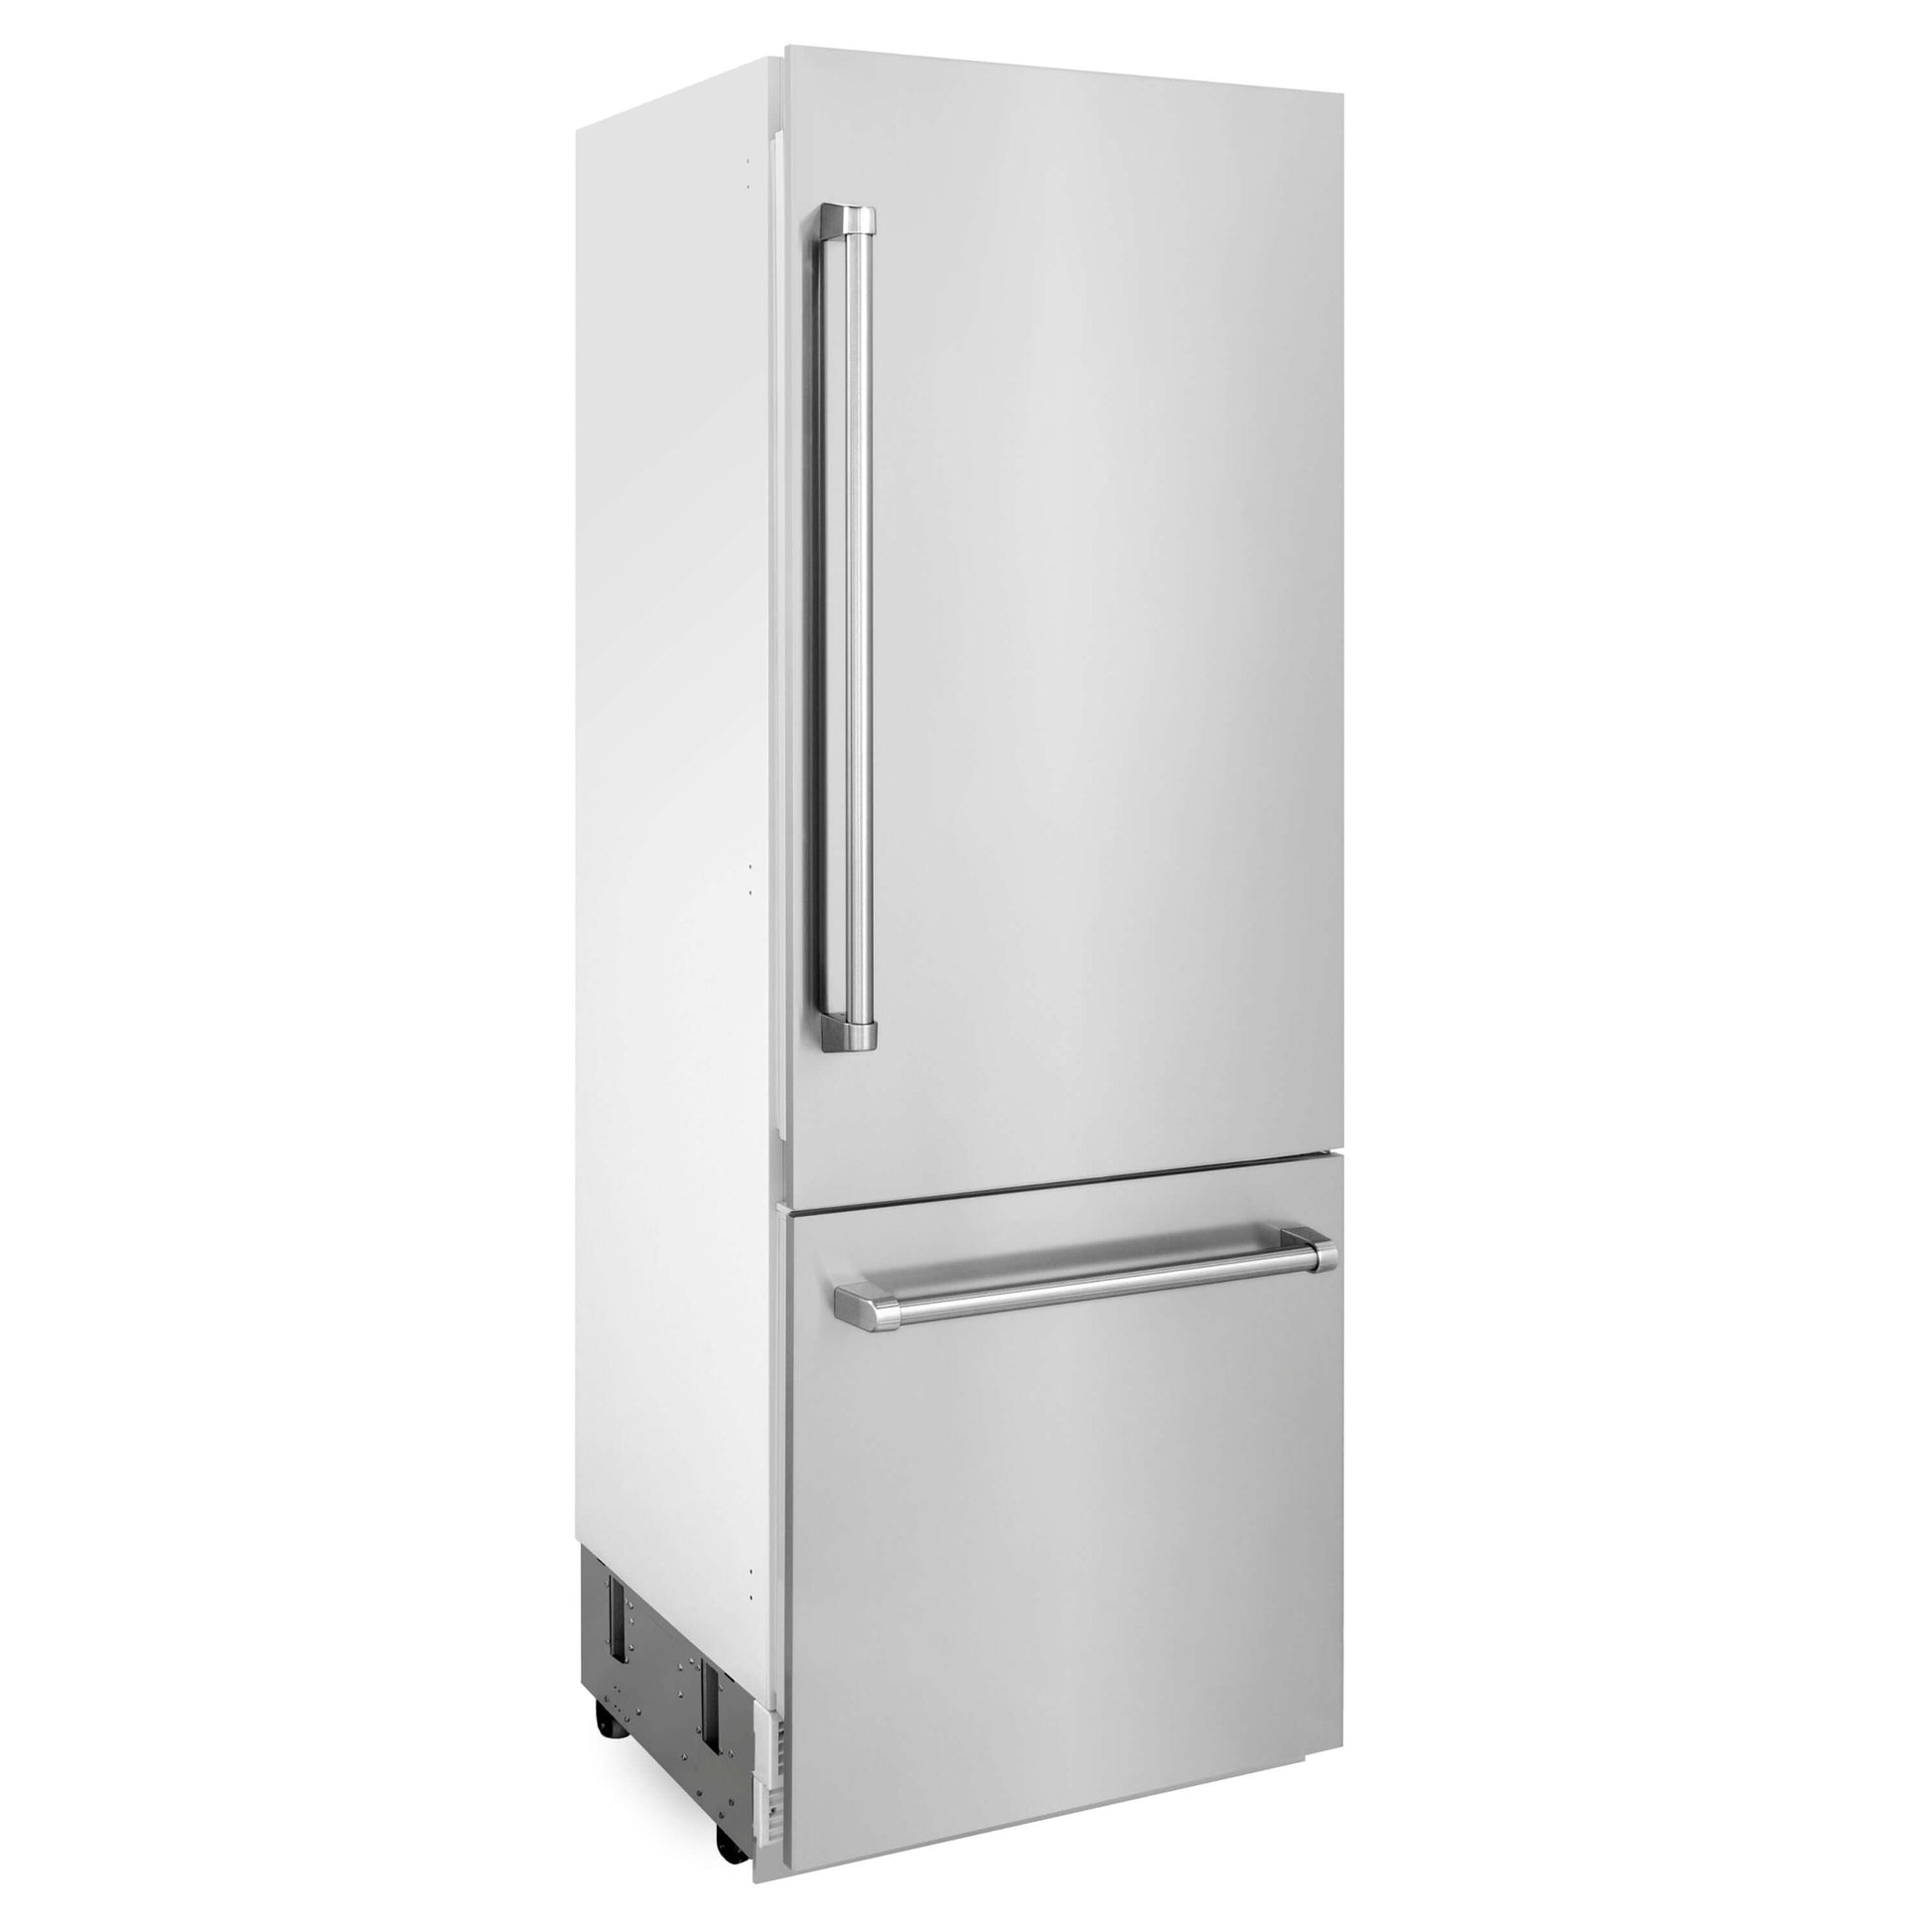 ZLINE 30 in. 16.1 cu. ft. Panel Ready Built-In 2-Door Bottom Freezer Refrigerator with Internal Water and Ice Dispenser (RBIV-30) side, doors closed.